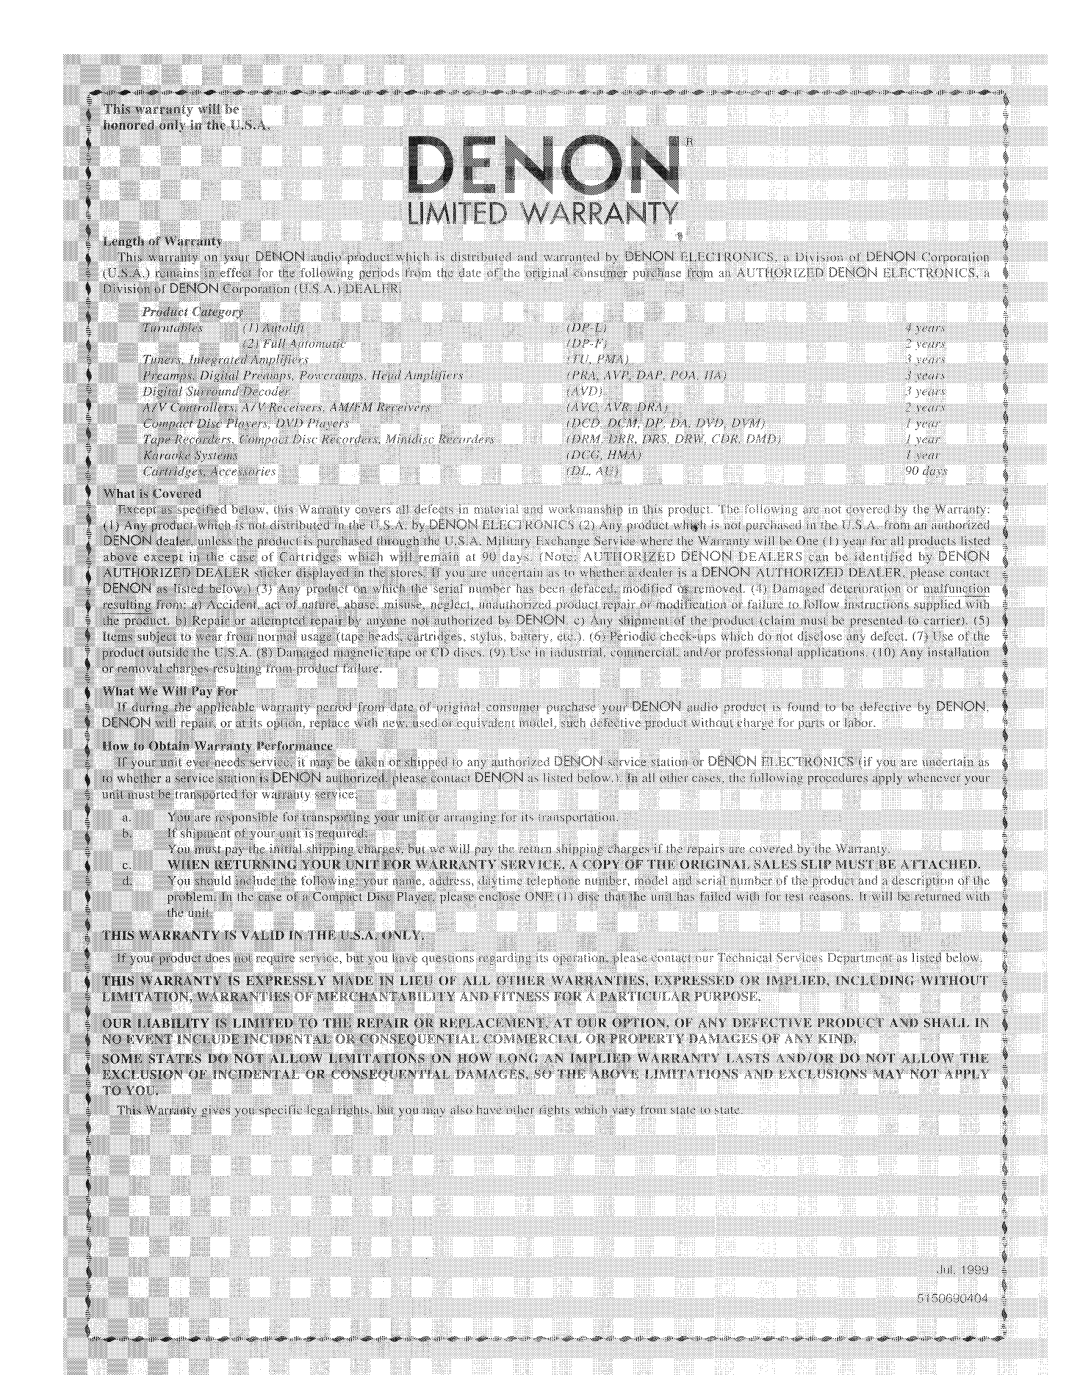 Denon DRM-555 manual 